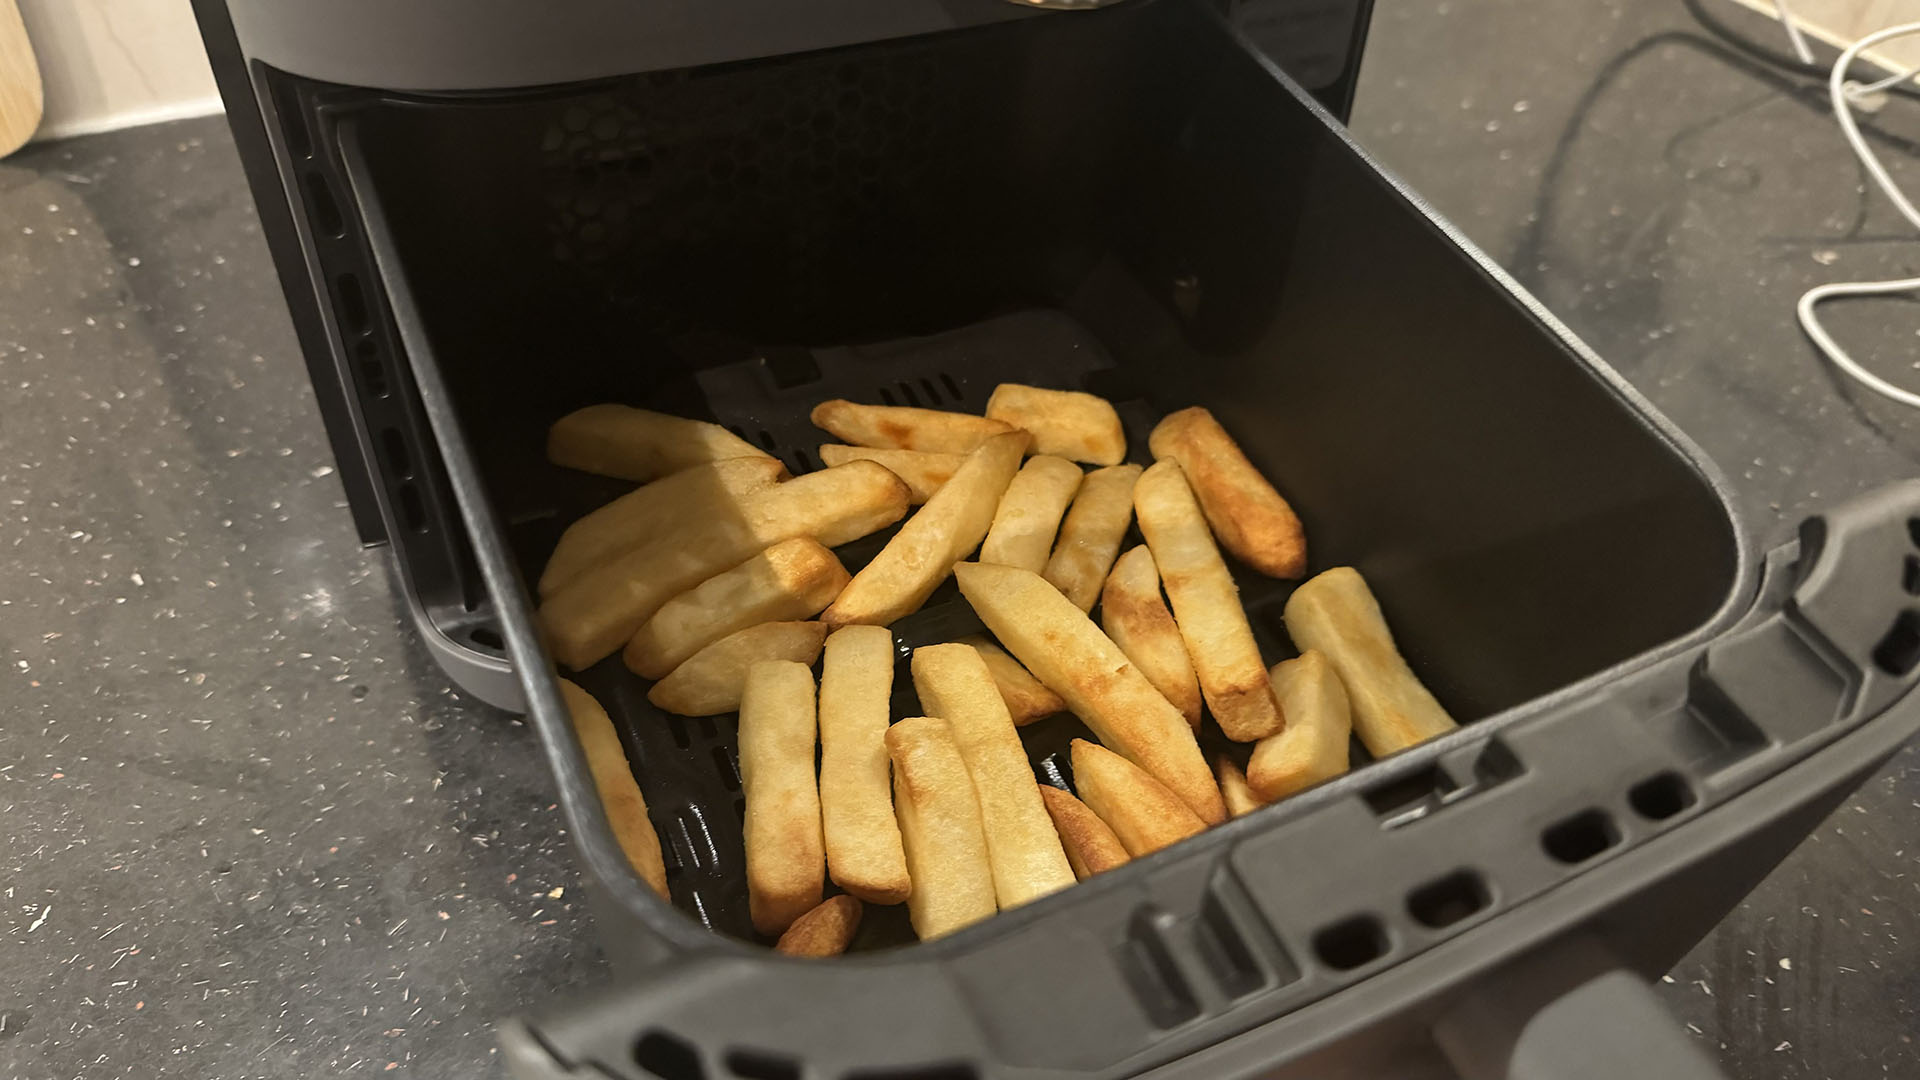 Chips / fries in Ninja Double Stack air fryer